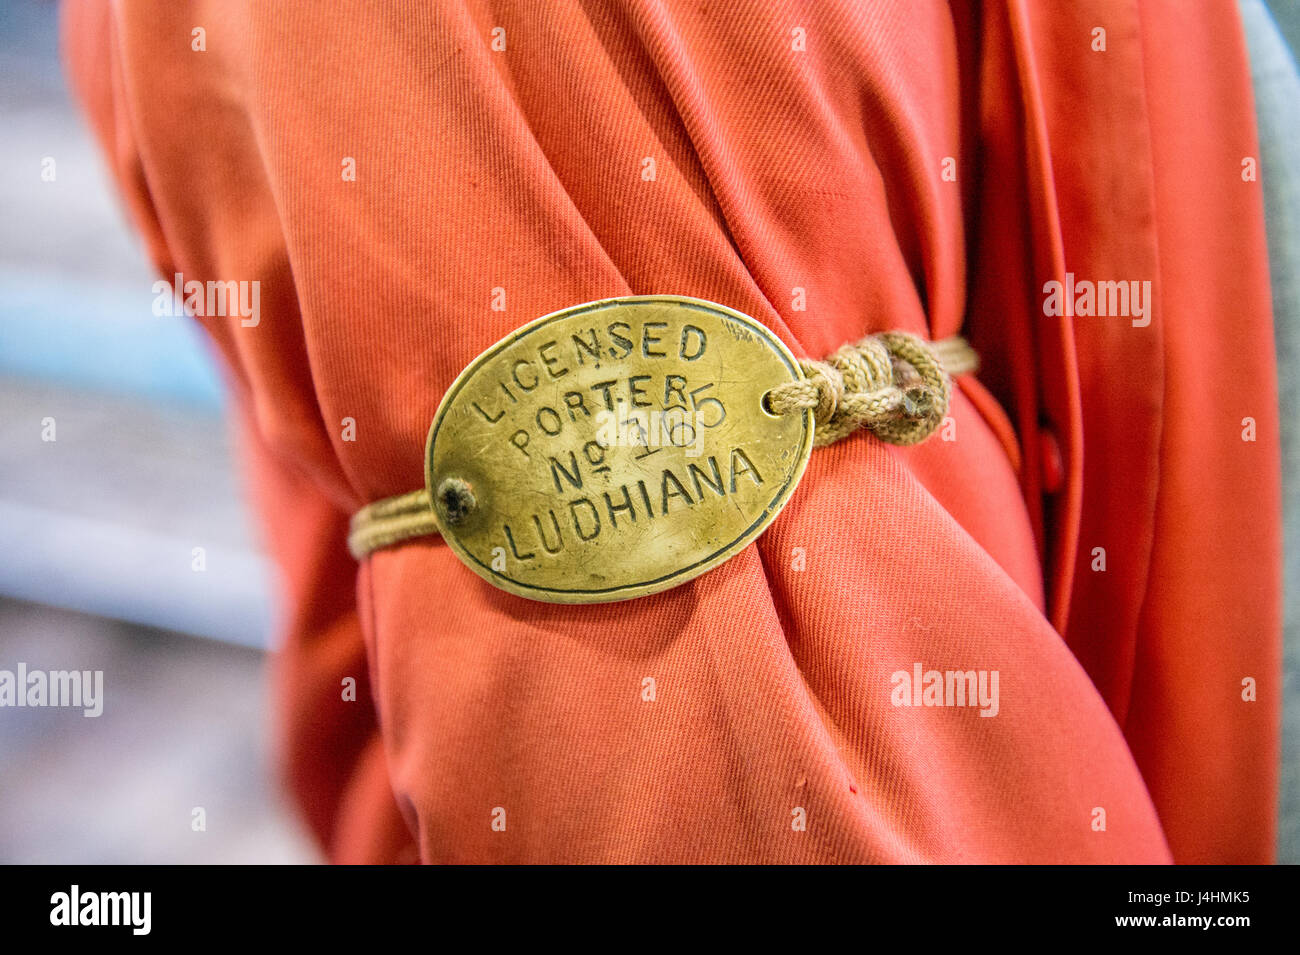 Ludhiana, India, Railway porter badge Stock Photo